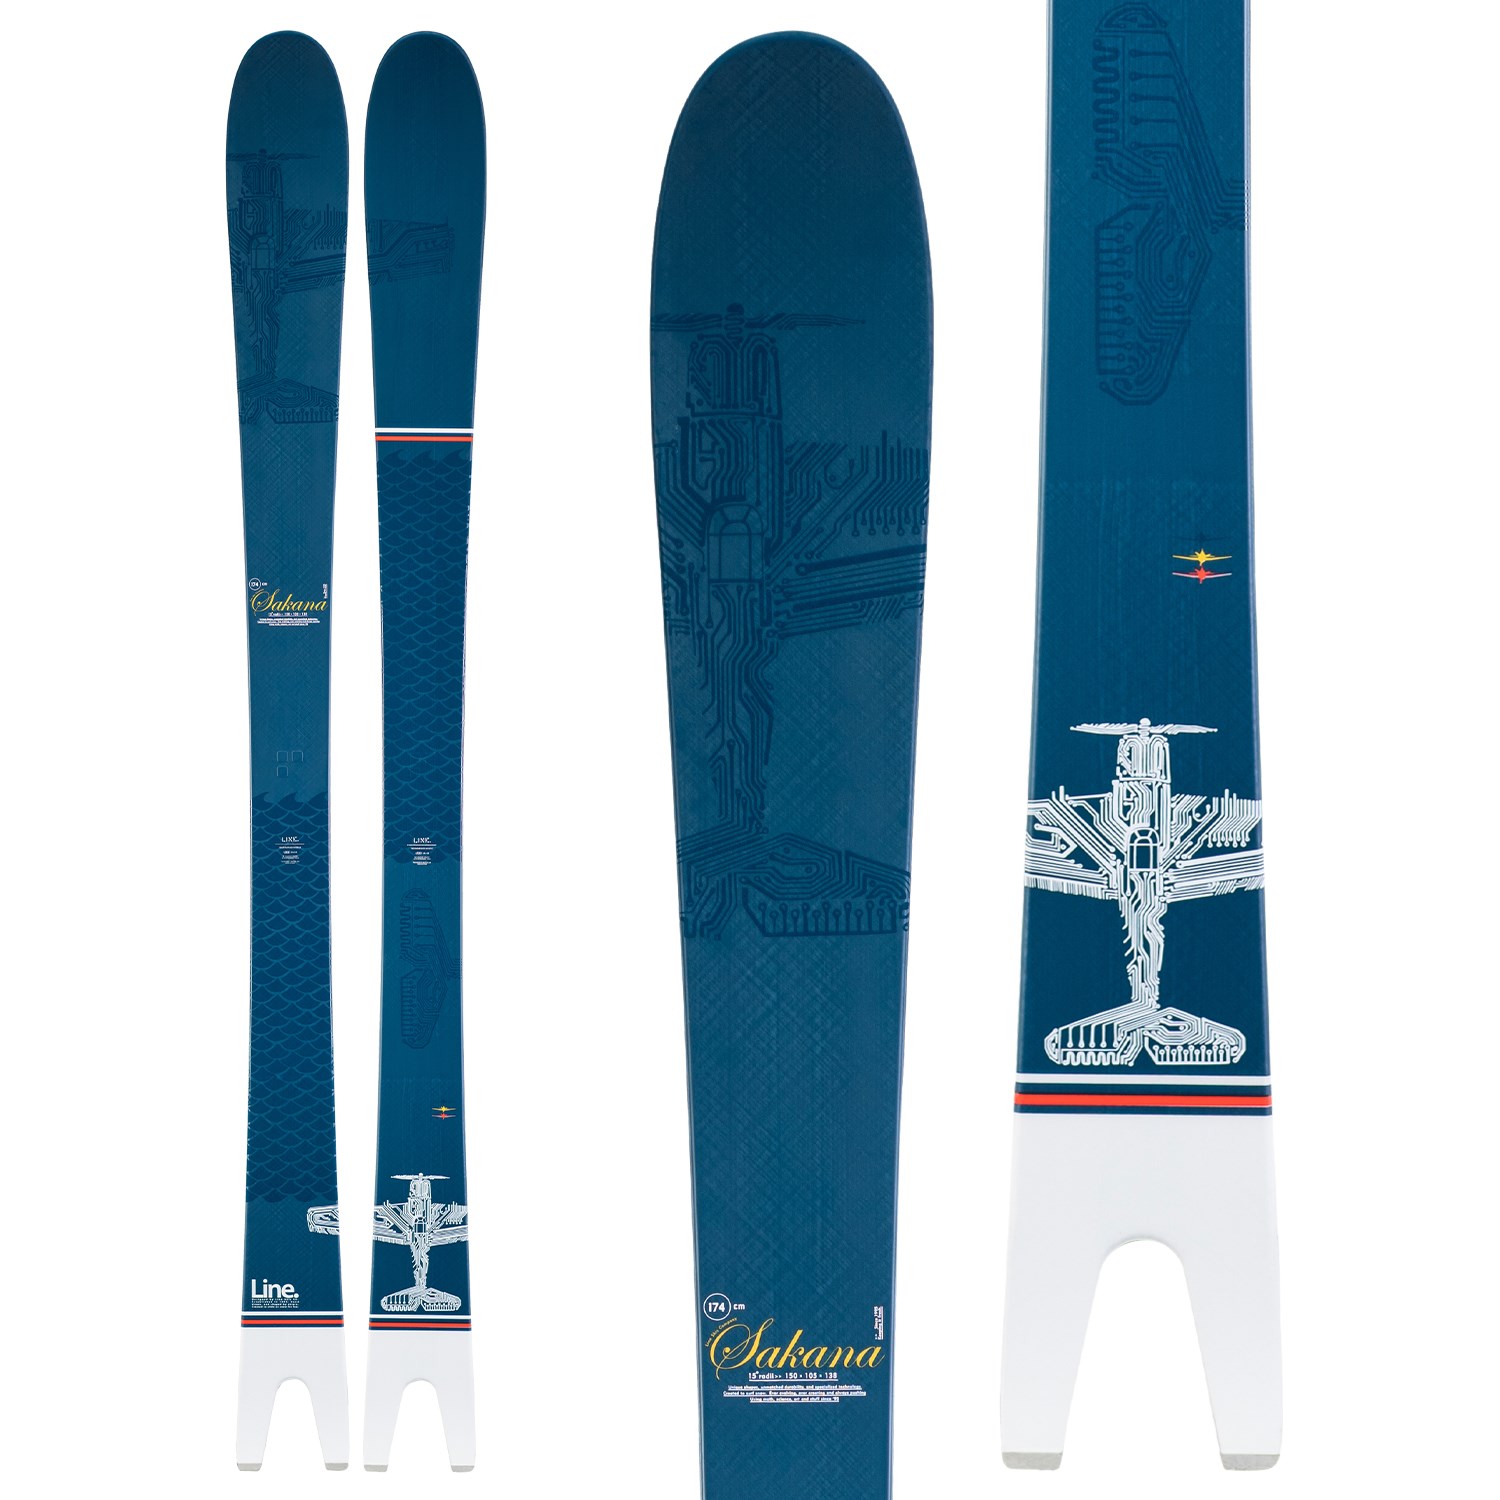 Details about   line sakana skis 